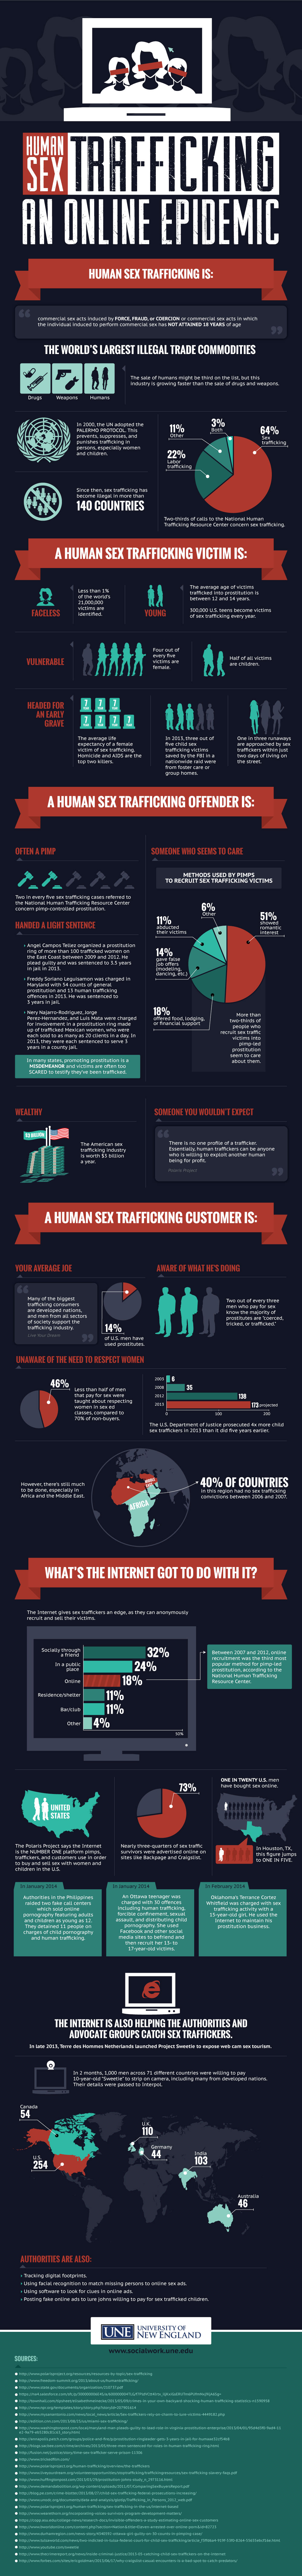 Human Sex Trafficking: An Online Epidemic